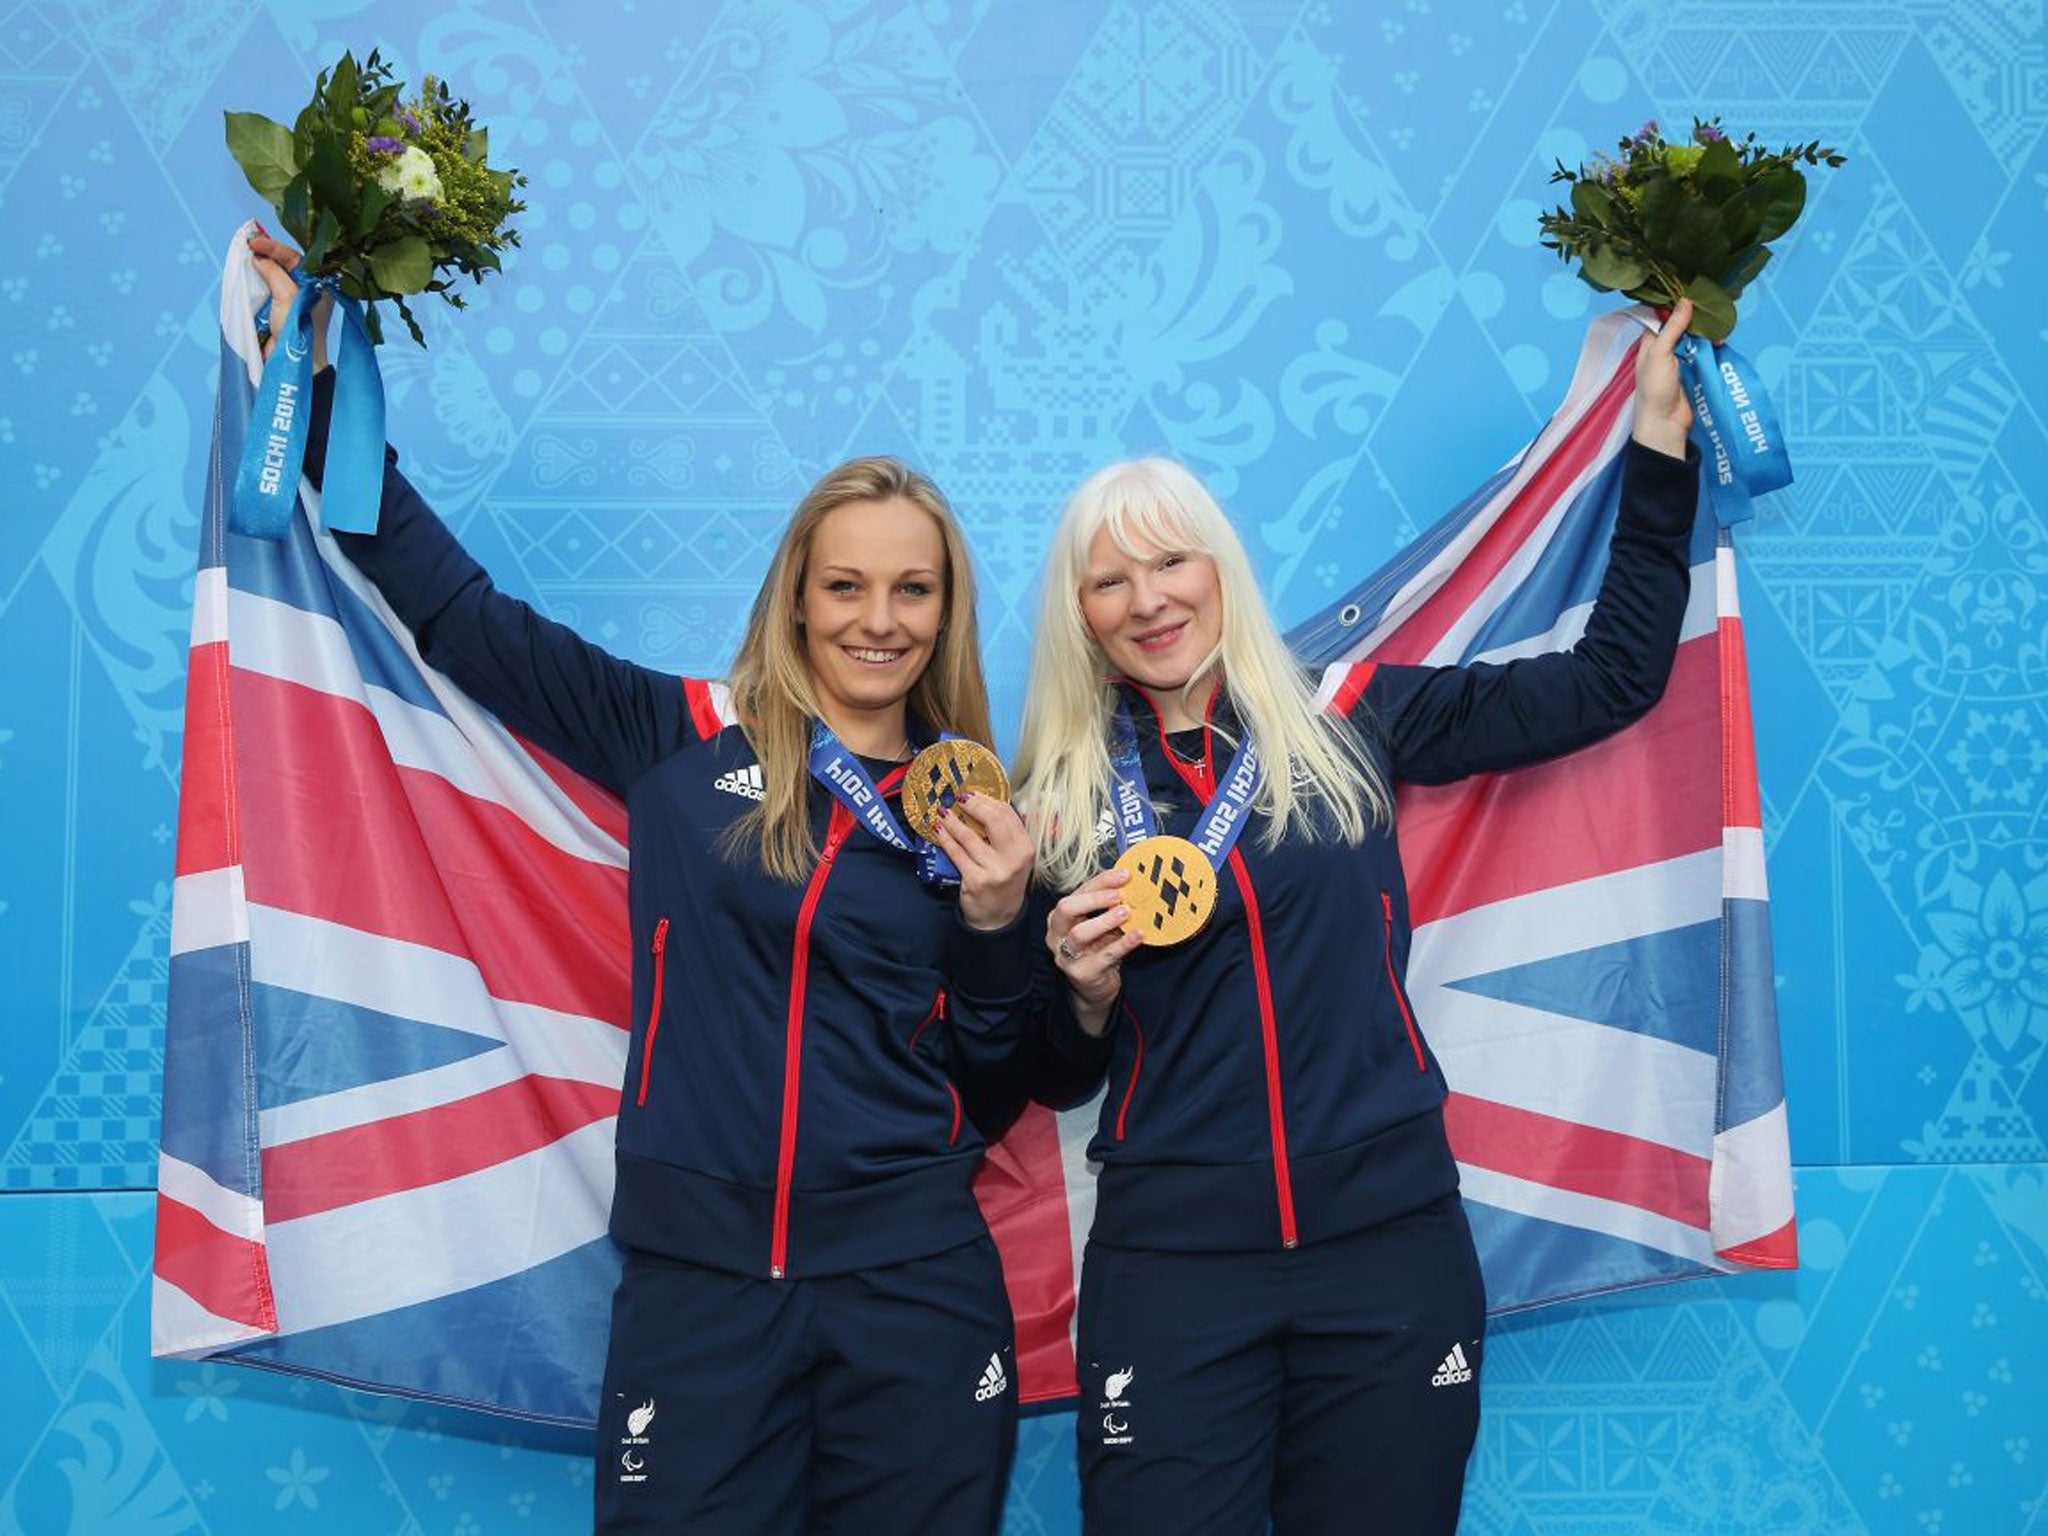 Kelly Gallagher & Charlotte Evans, skiers